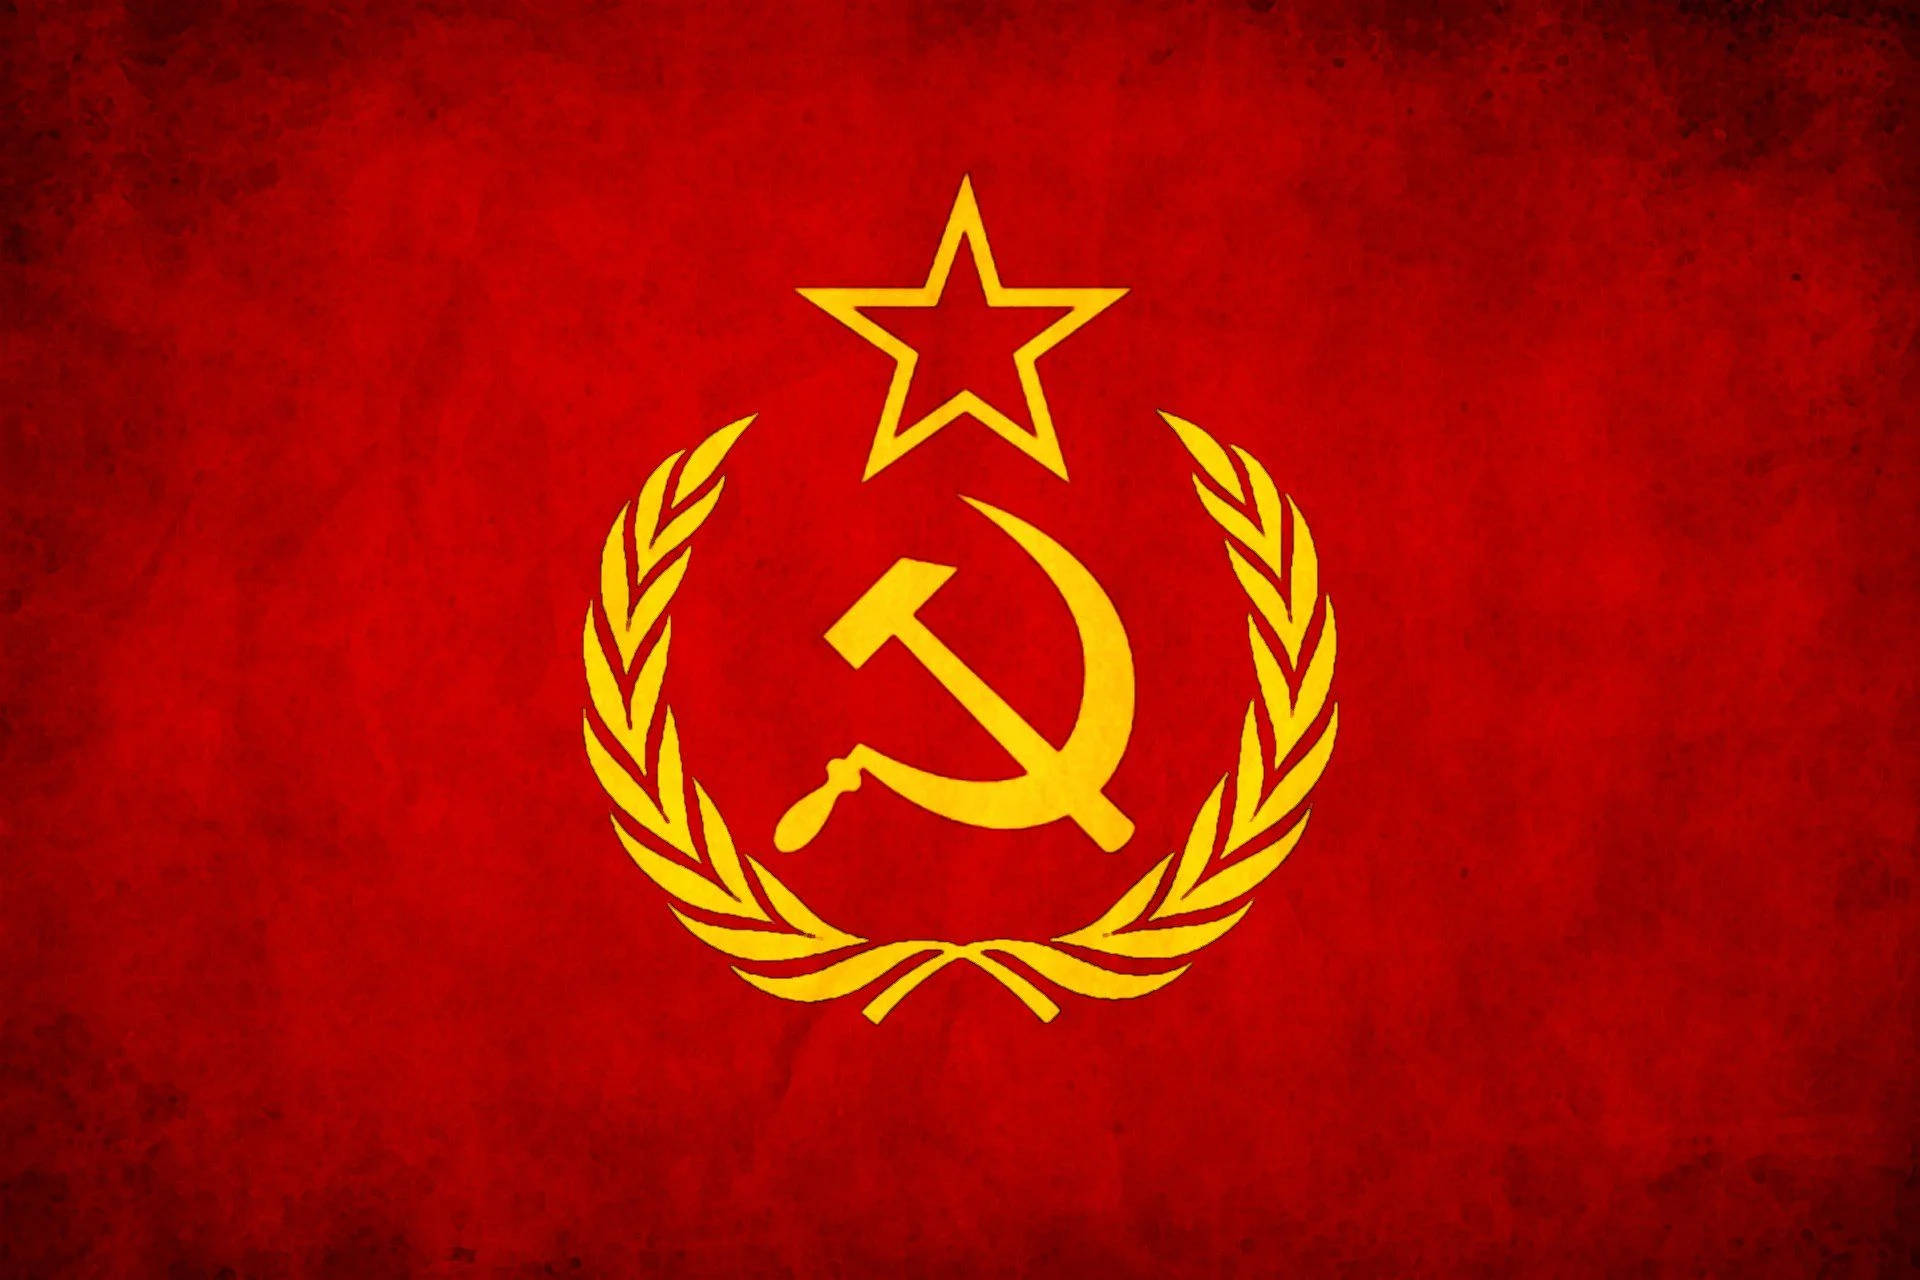 Free Soviet Union Flag Wallpaper Downloads, [100+] Soviet Union Flag  Wallpapers for FREE 